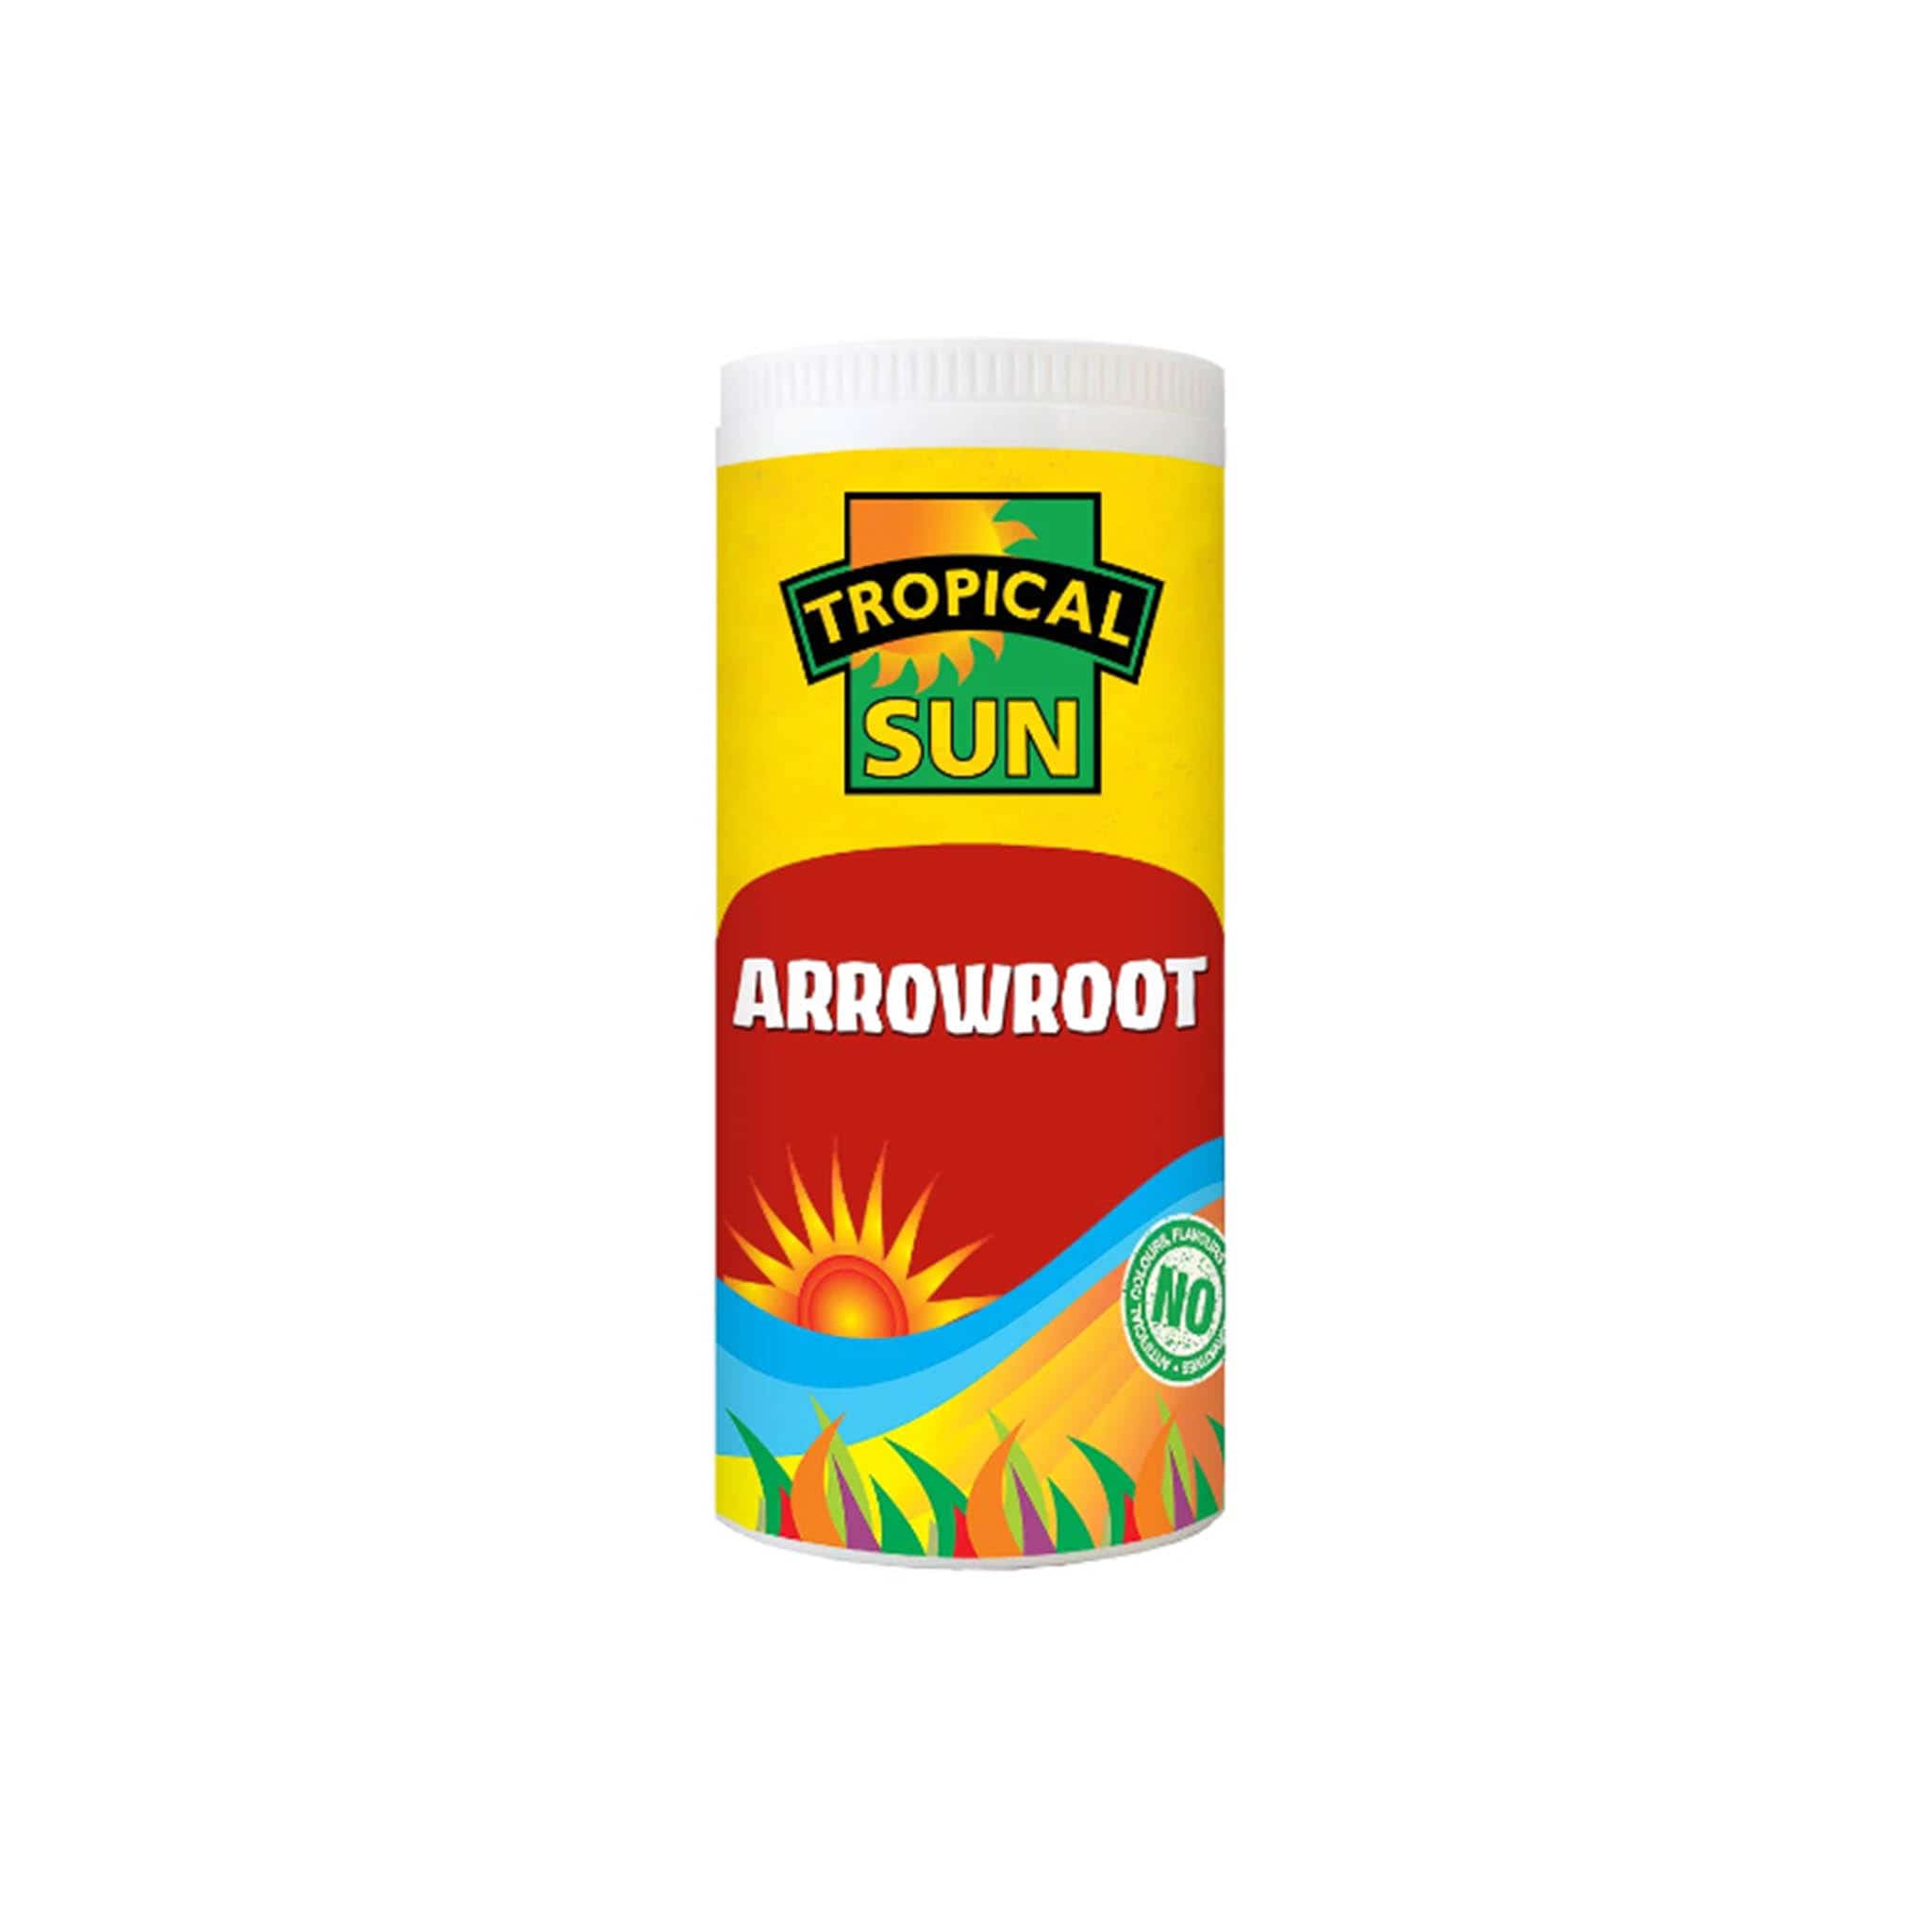 Tropical Sun Arrowroot, 100g